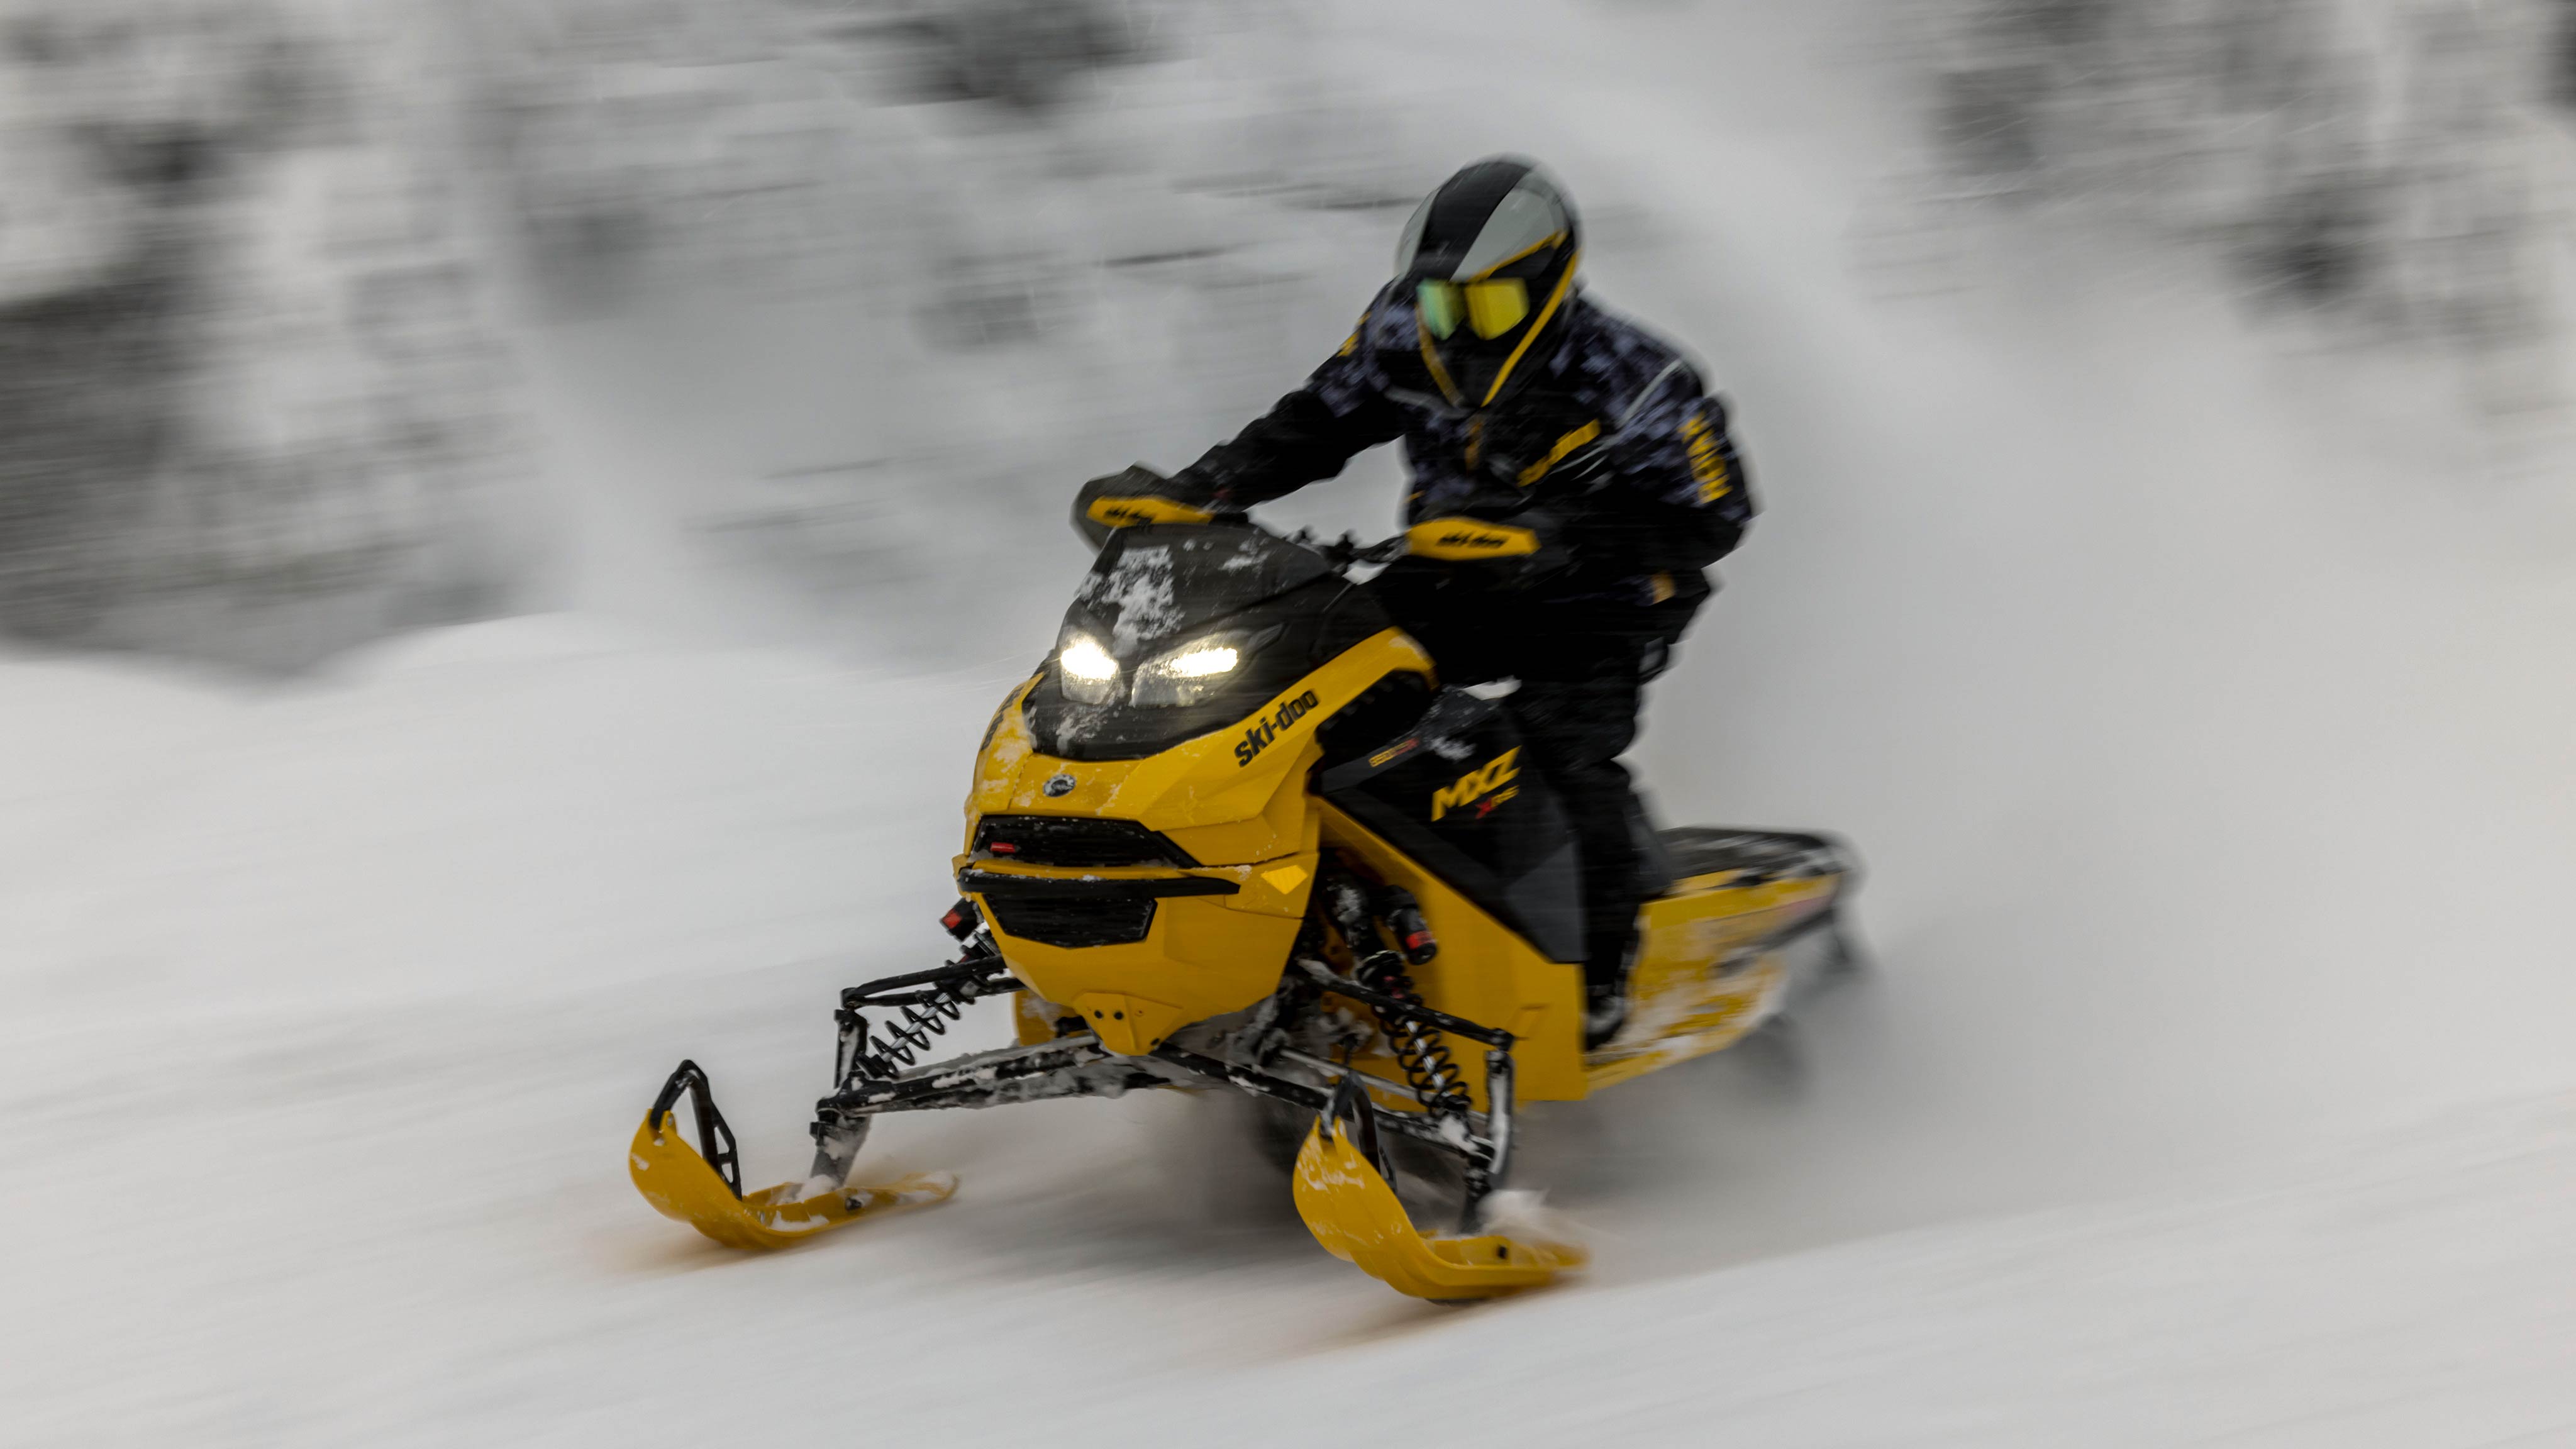 2025 Ski-Doo MXZ snowmobile going at high speed